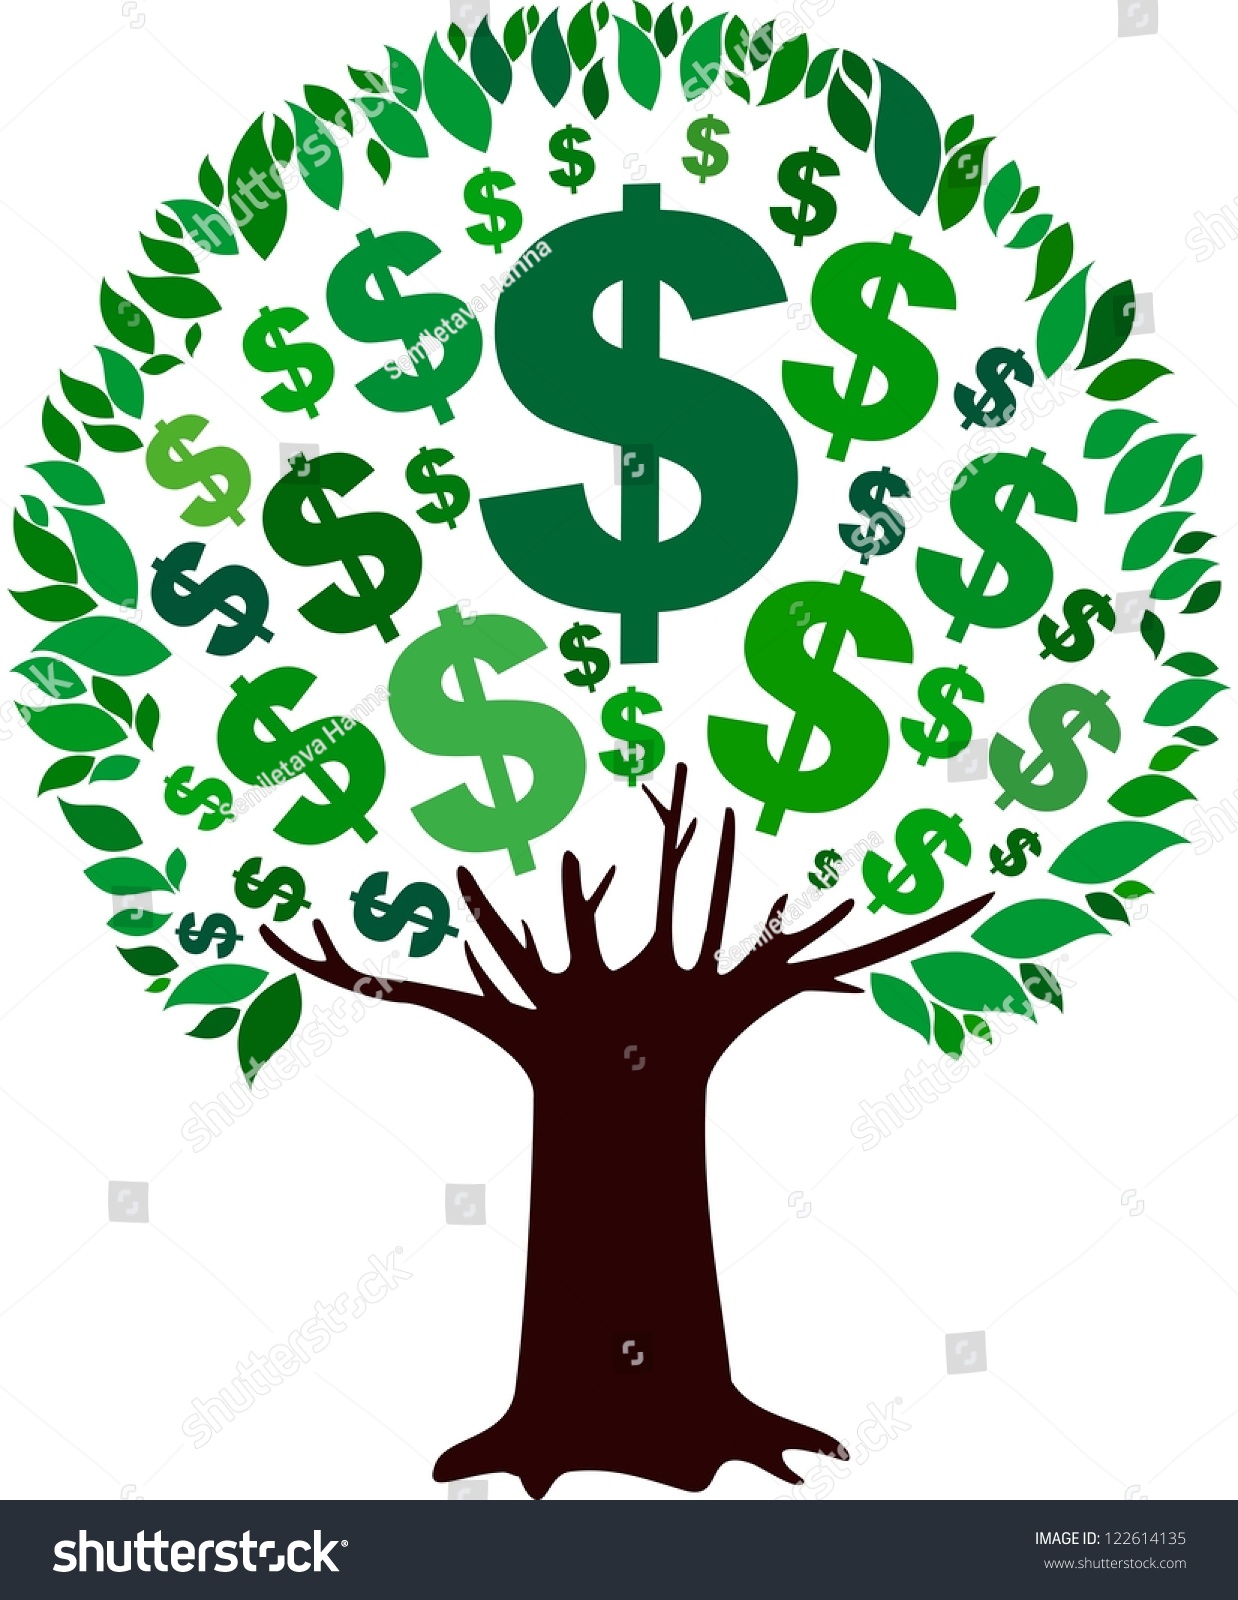 clipart of money tree - photo #43